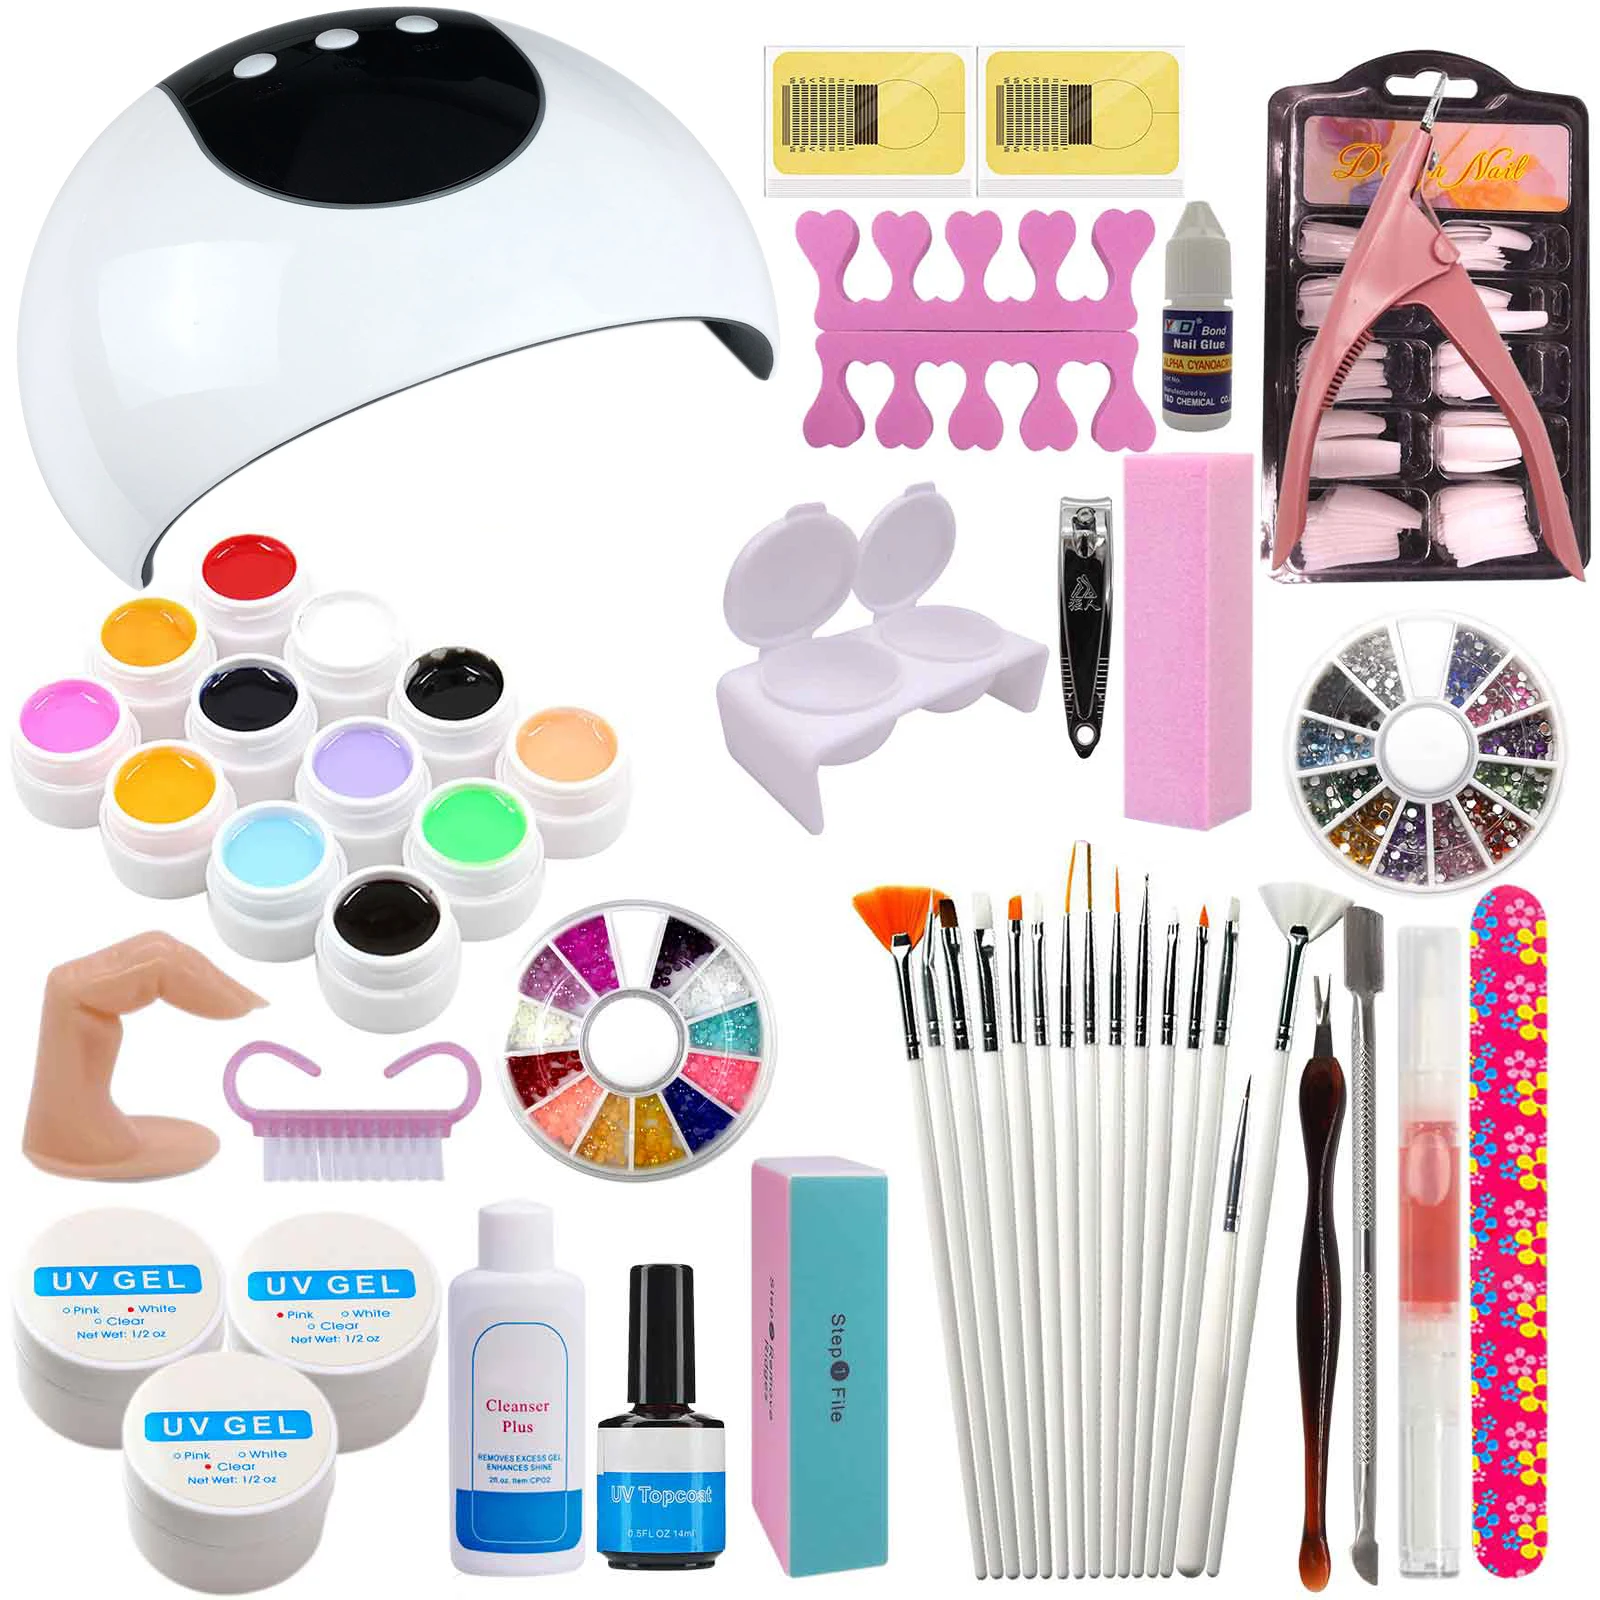 Warm Girl Builder Gel Nail Kit - 12 Colors UV Gels,Clear Pink White Nail Extension Gel Kit Strengthen Nail Art Manicure Set